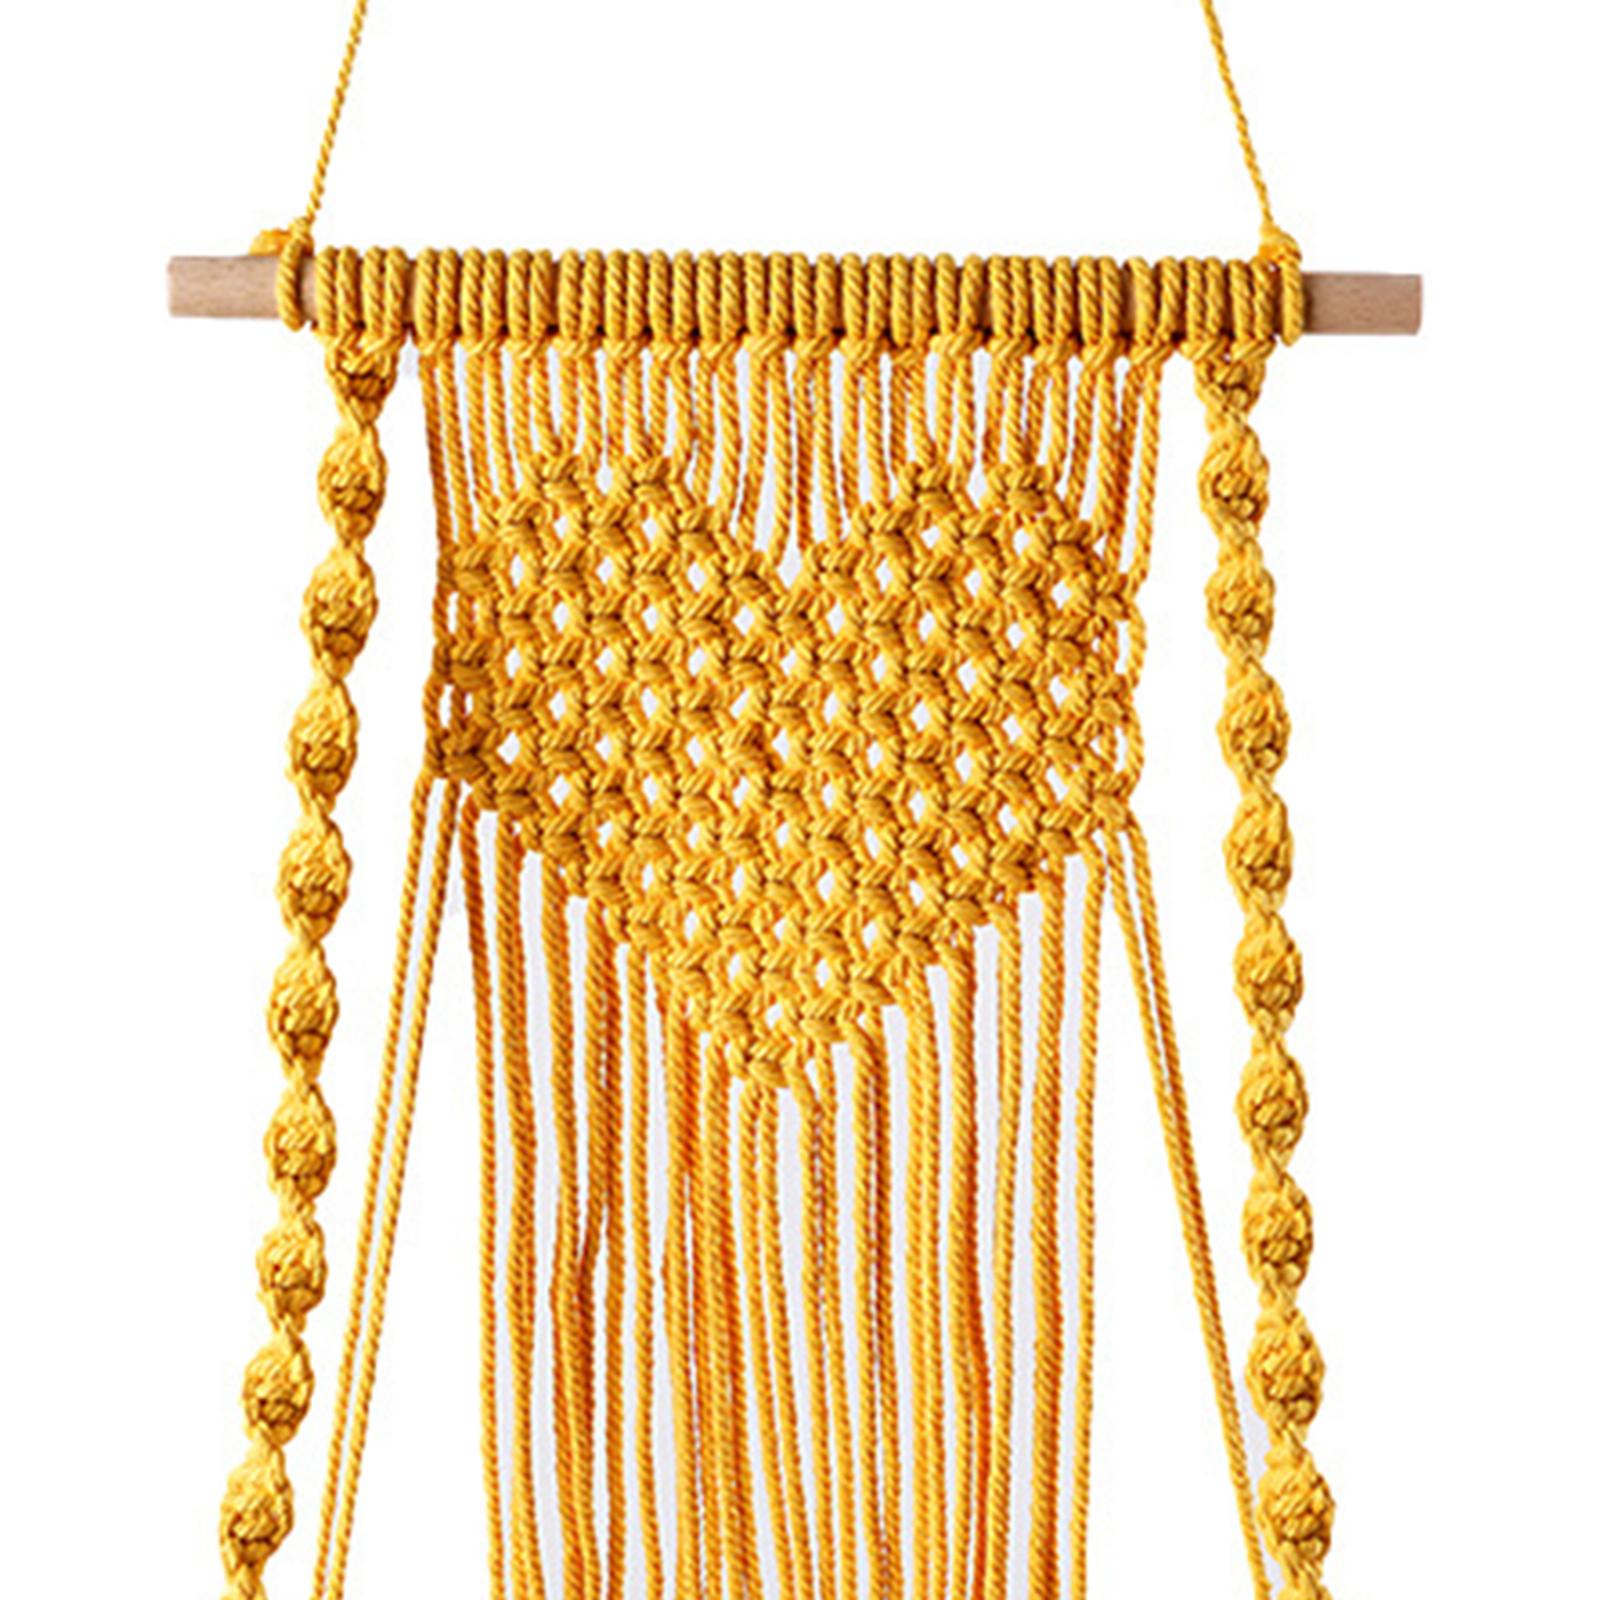 Macrame Wall Hanging Shelf Basket Hanger Holder Boho Woven Rope for Home Yellow